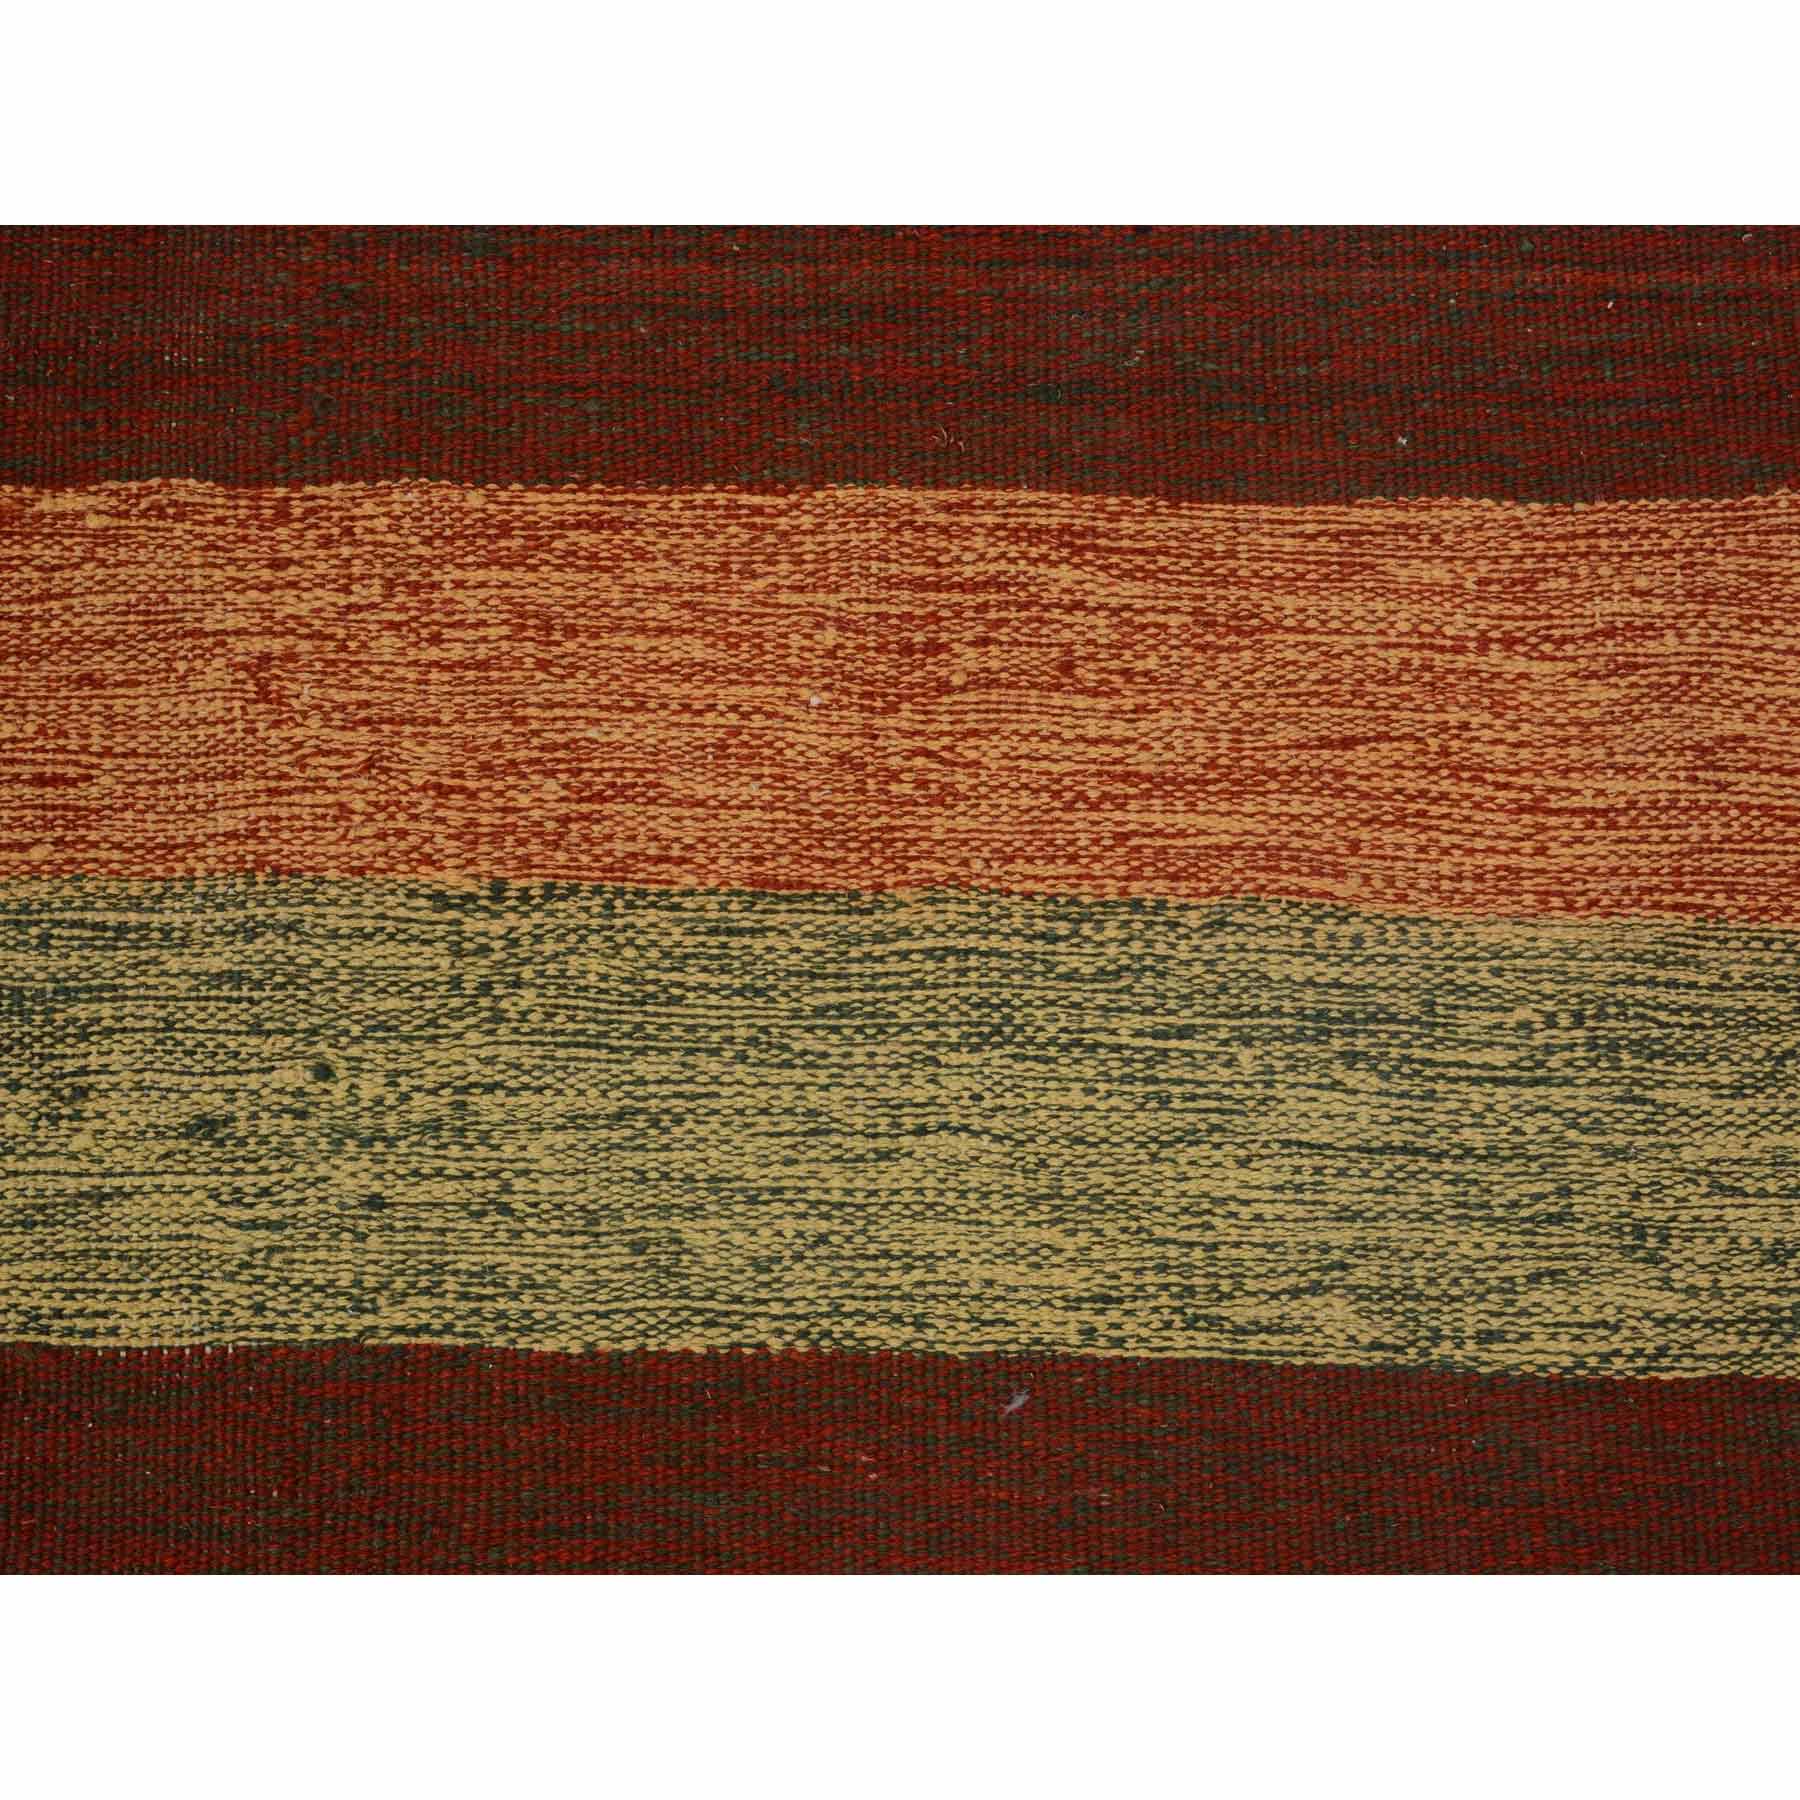 Flat-Weave-Hand-Woven-Rug-287500